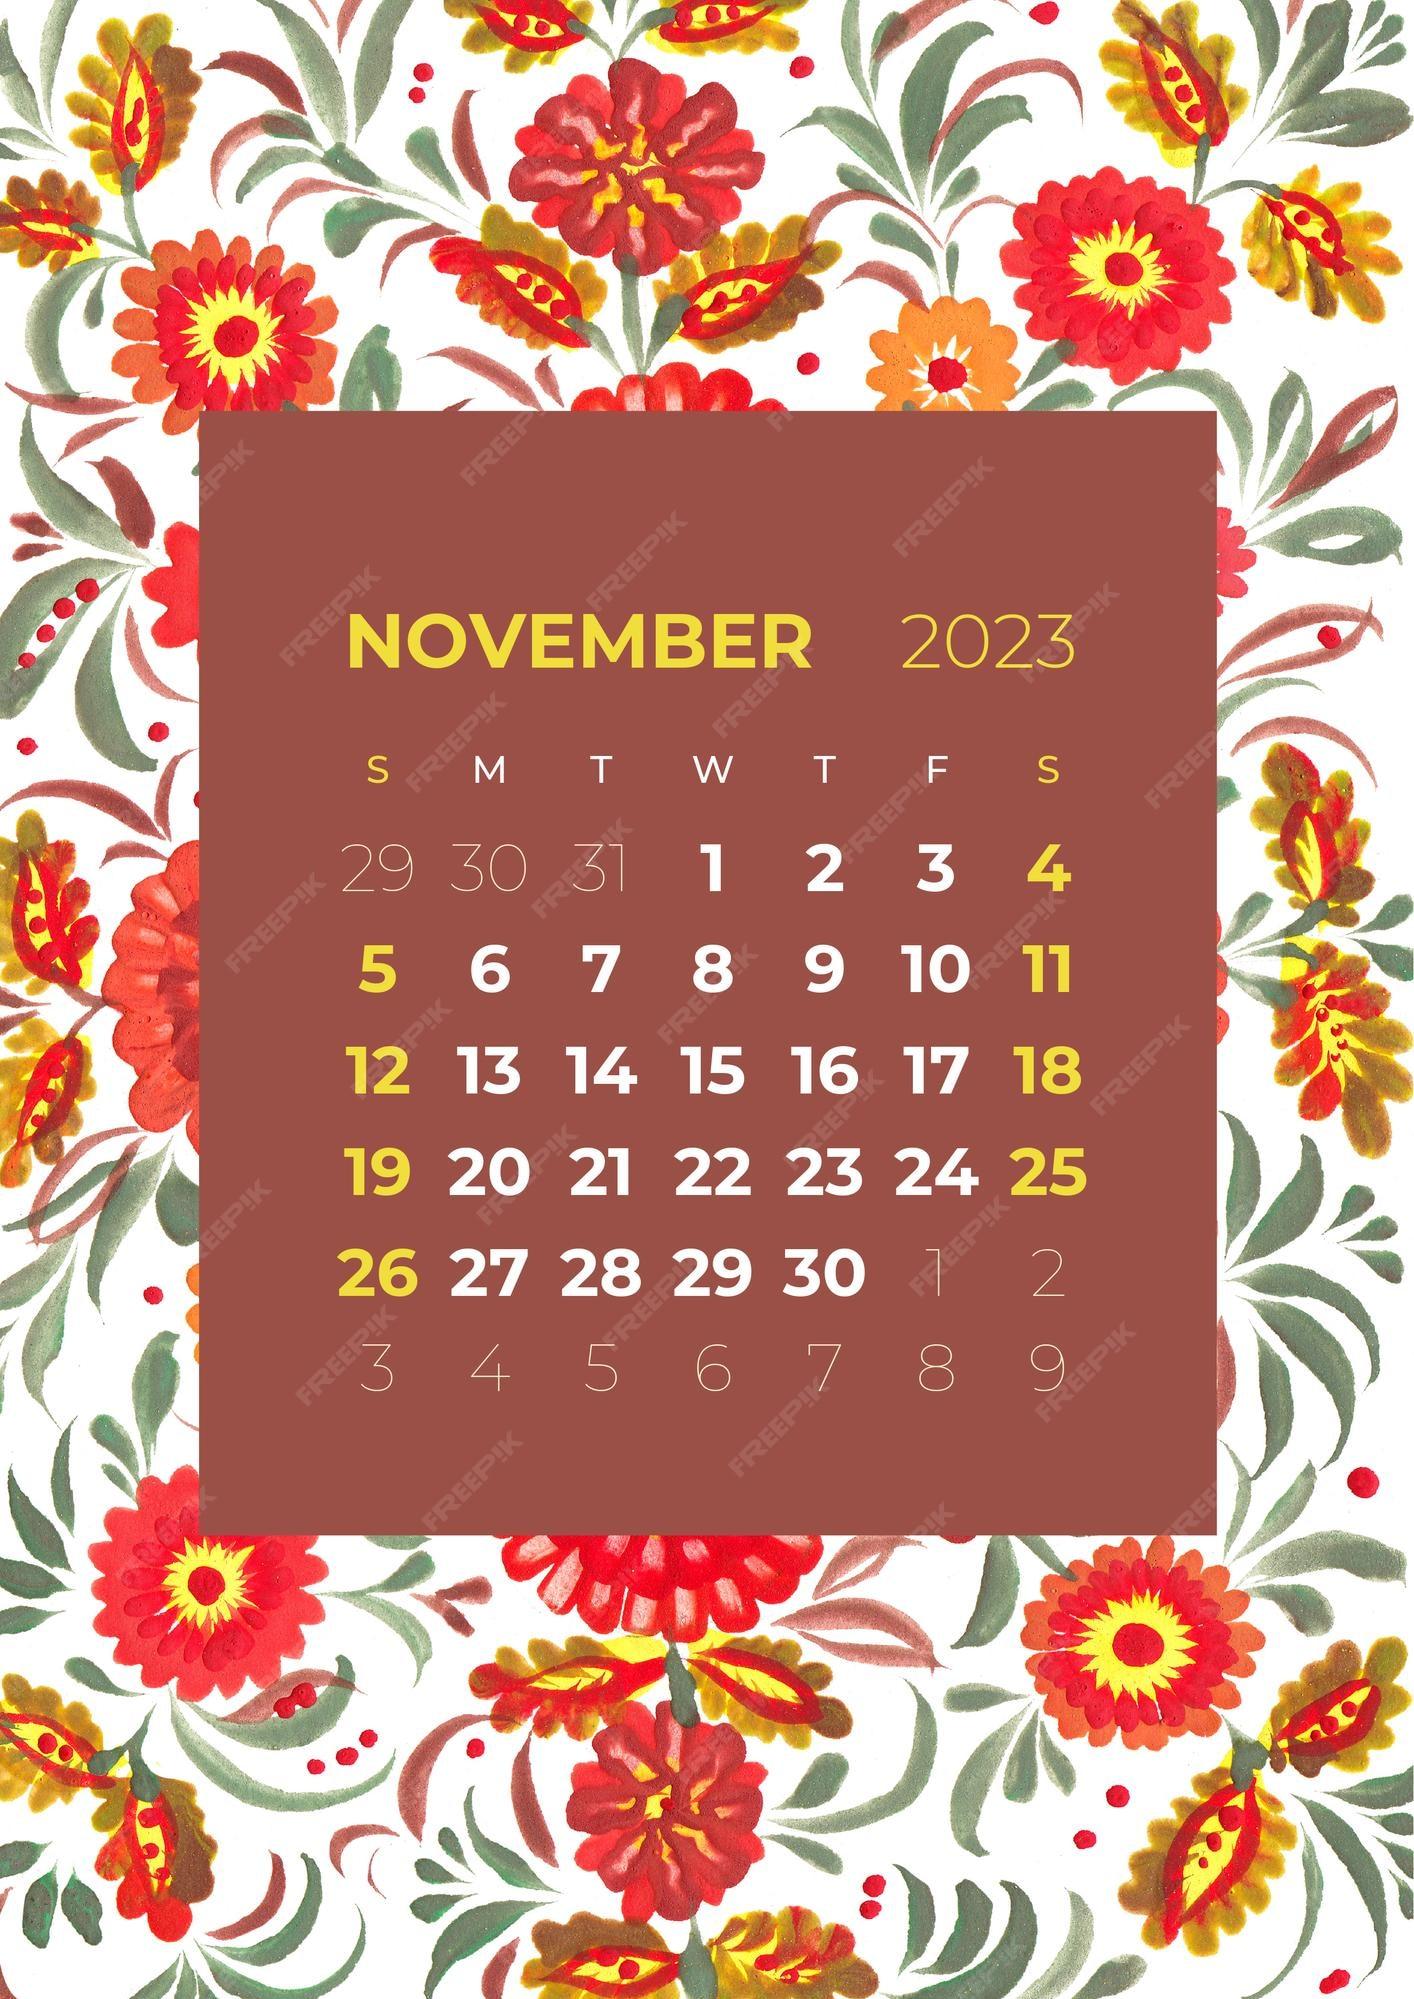 Premium Photo Year Monthly Calendar Illustration Of Flowers